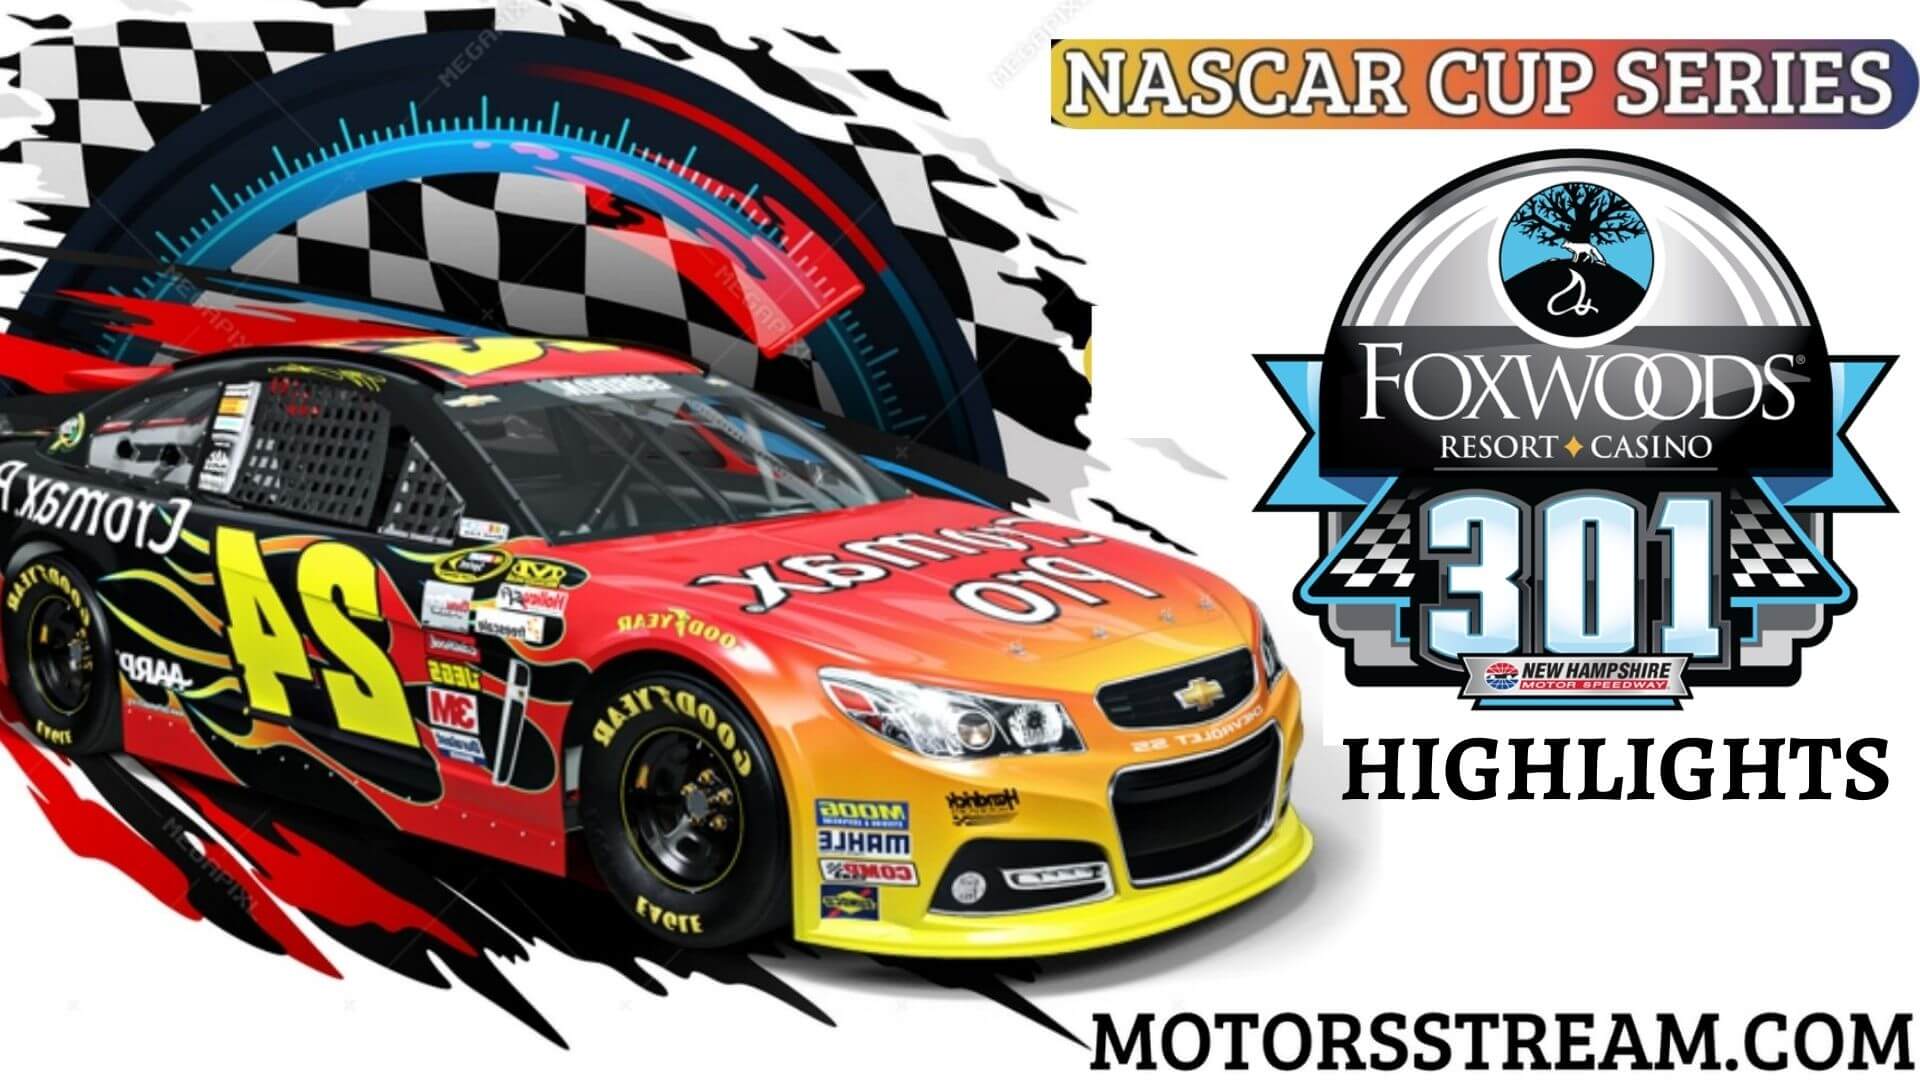 NASCAR Foxwoods Resort Casino 301 Highlights 2021 Cup